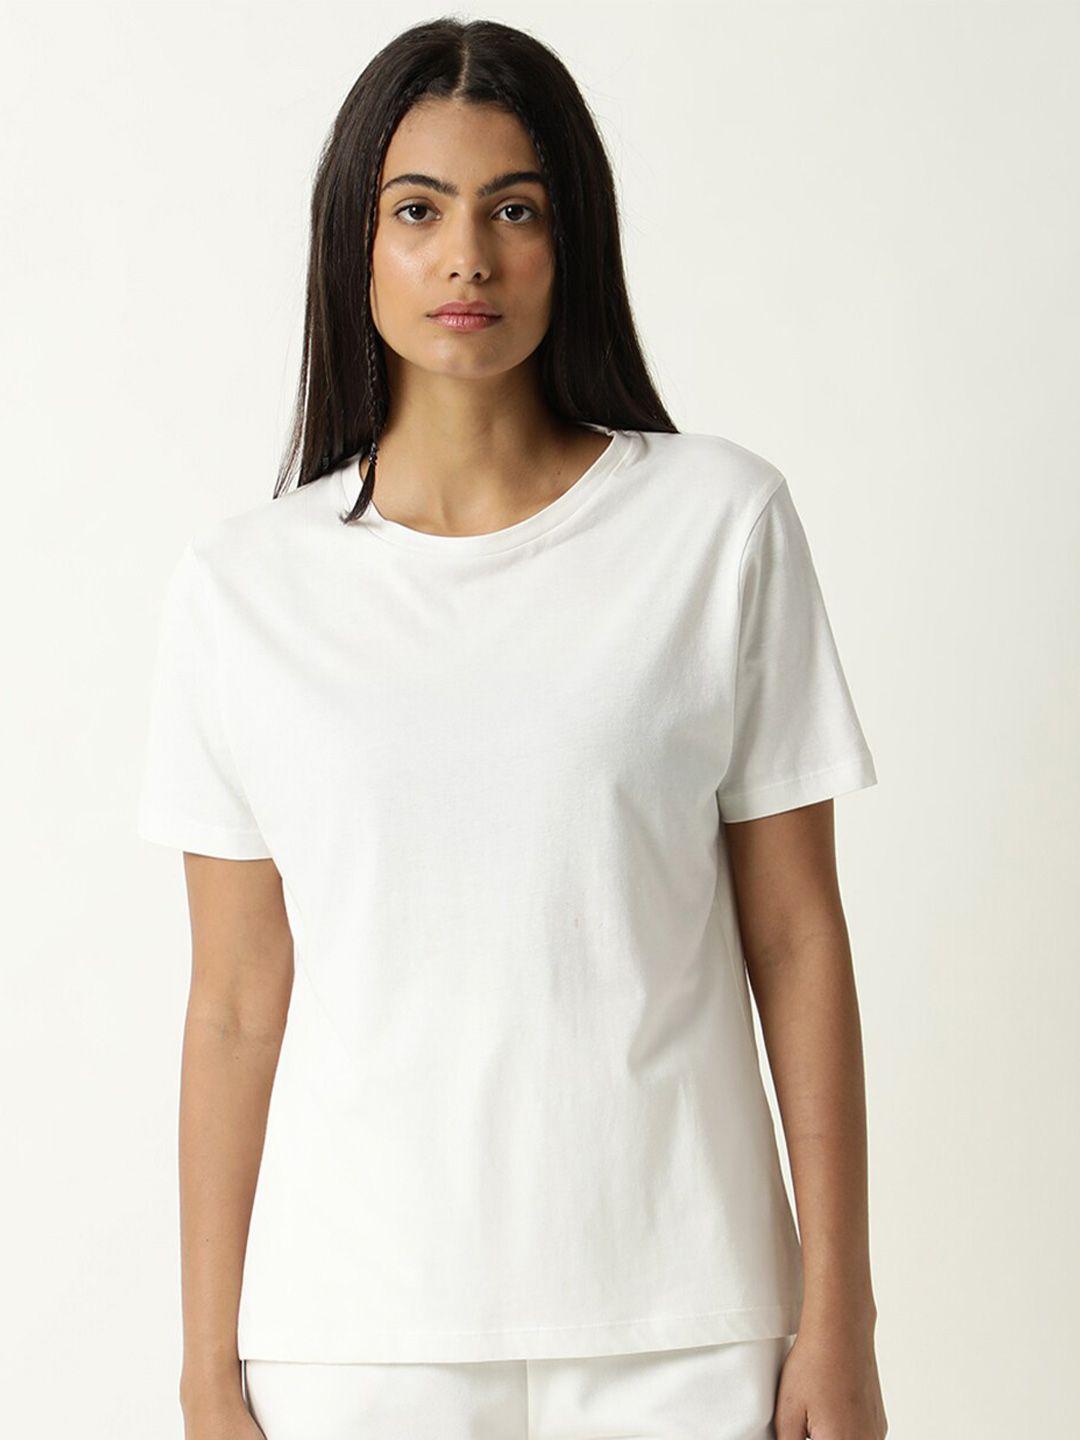 articale-women-off-white-solid-slim-fit-cotton-t-shirt